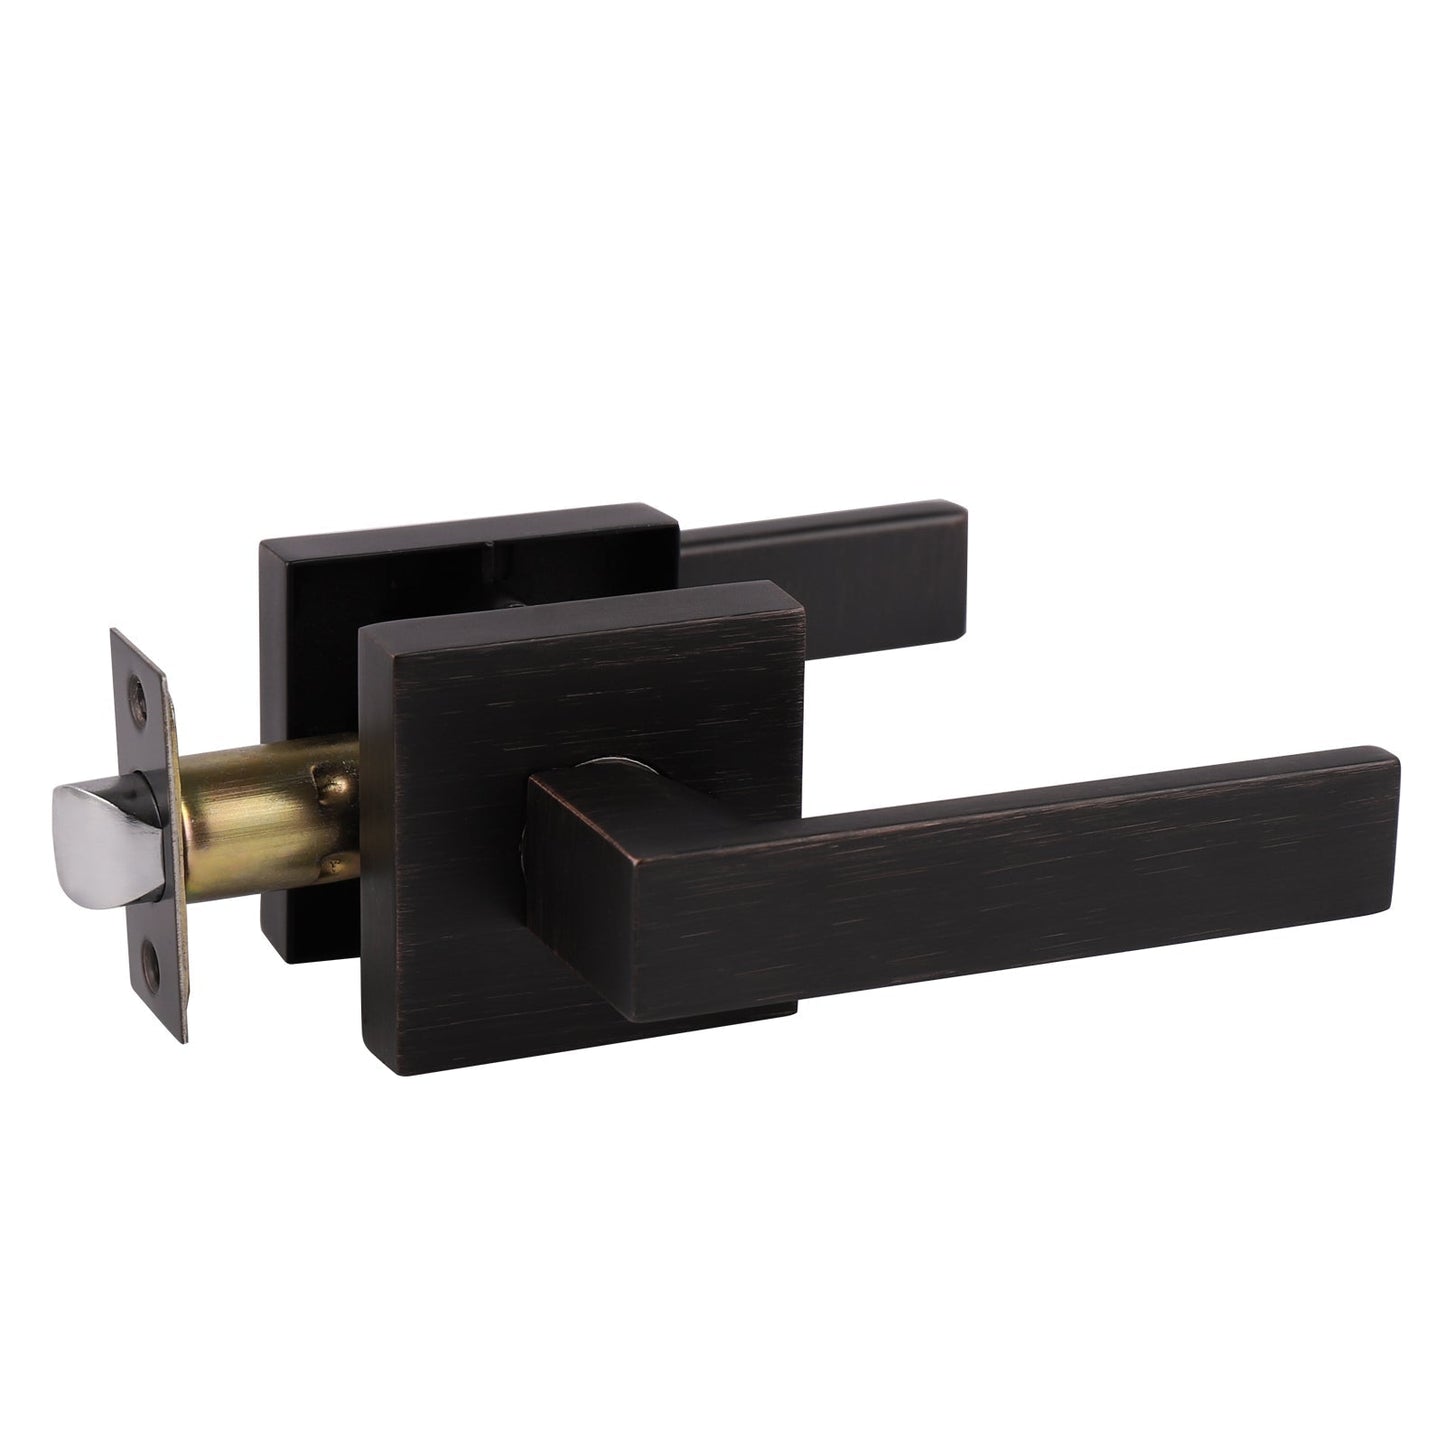 Probrico Door Handles Satin Nickel Finish, Black Finish and Oil Rubbed Bronze Door Levers 10 Packs - Probrico